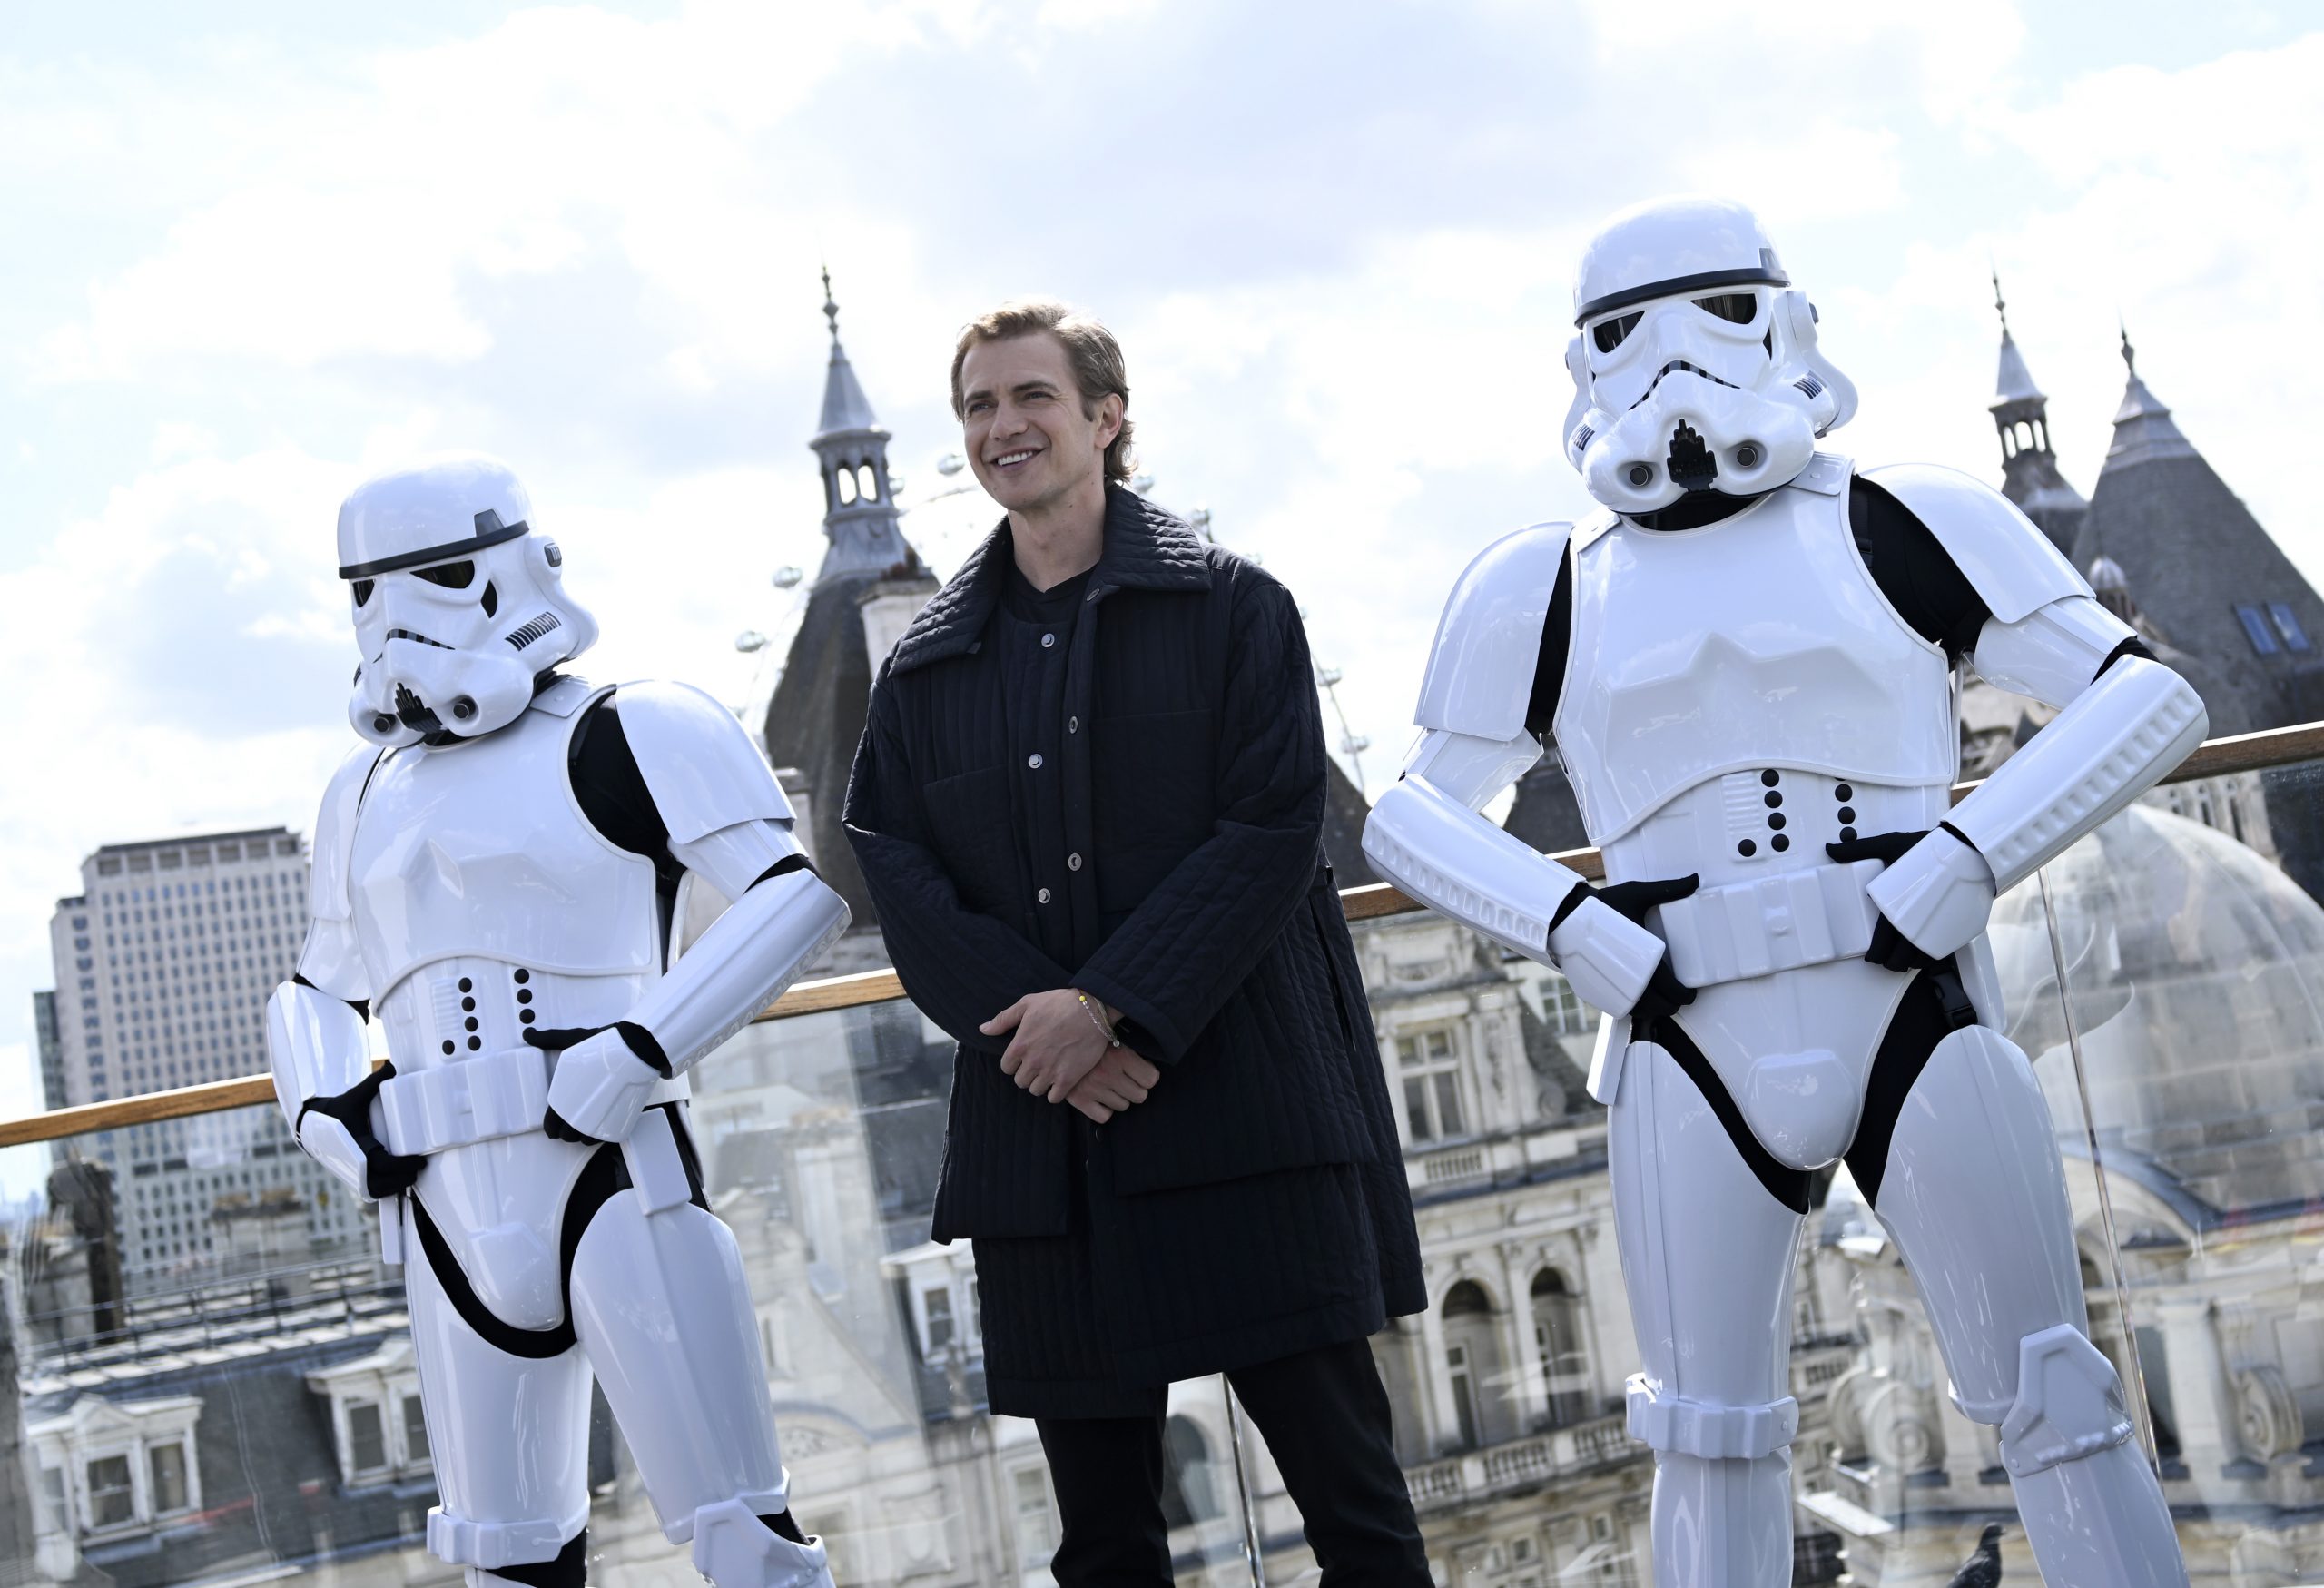 Darth Vader actor Hayden Christensen attends the photocall for Obi-Wan Kenobi in London